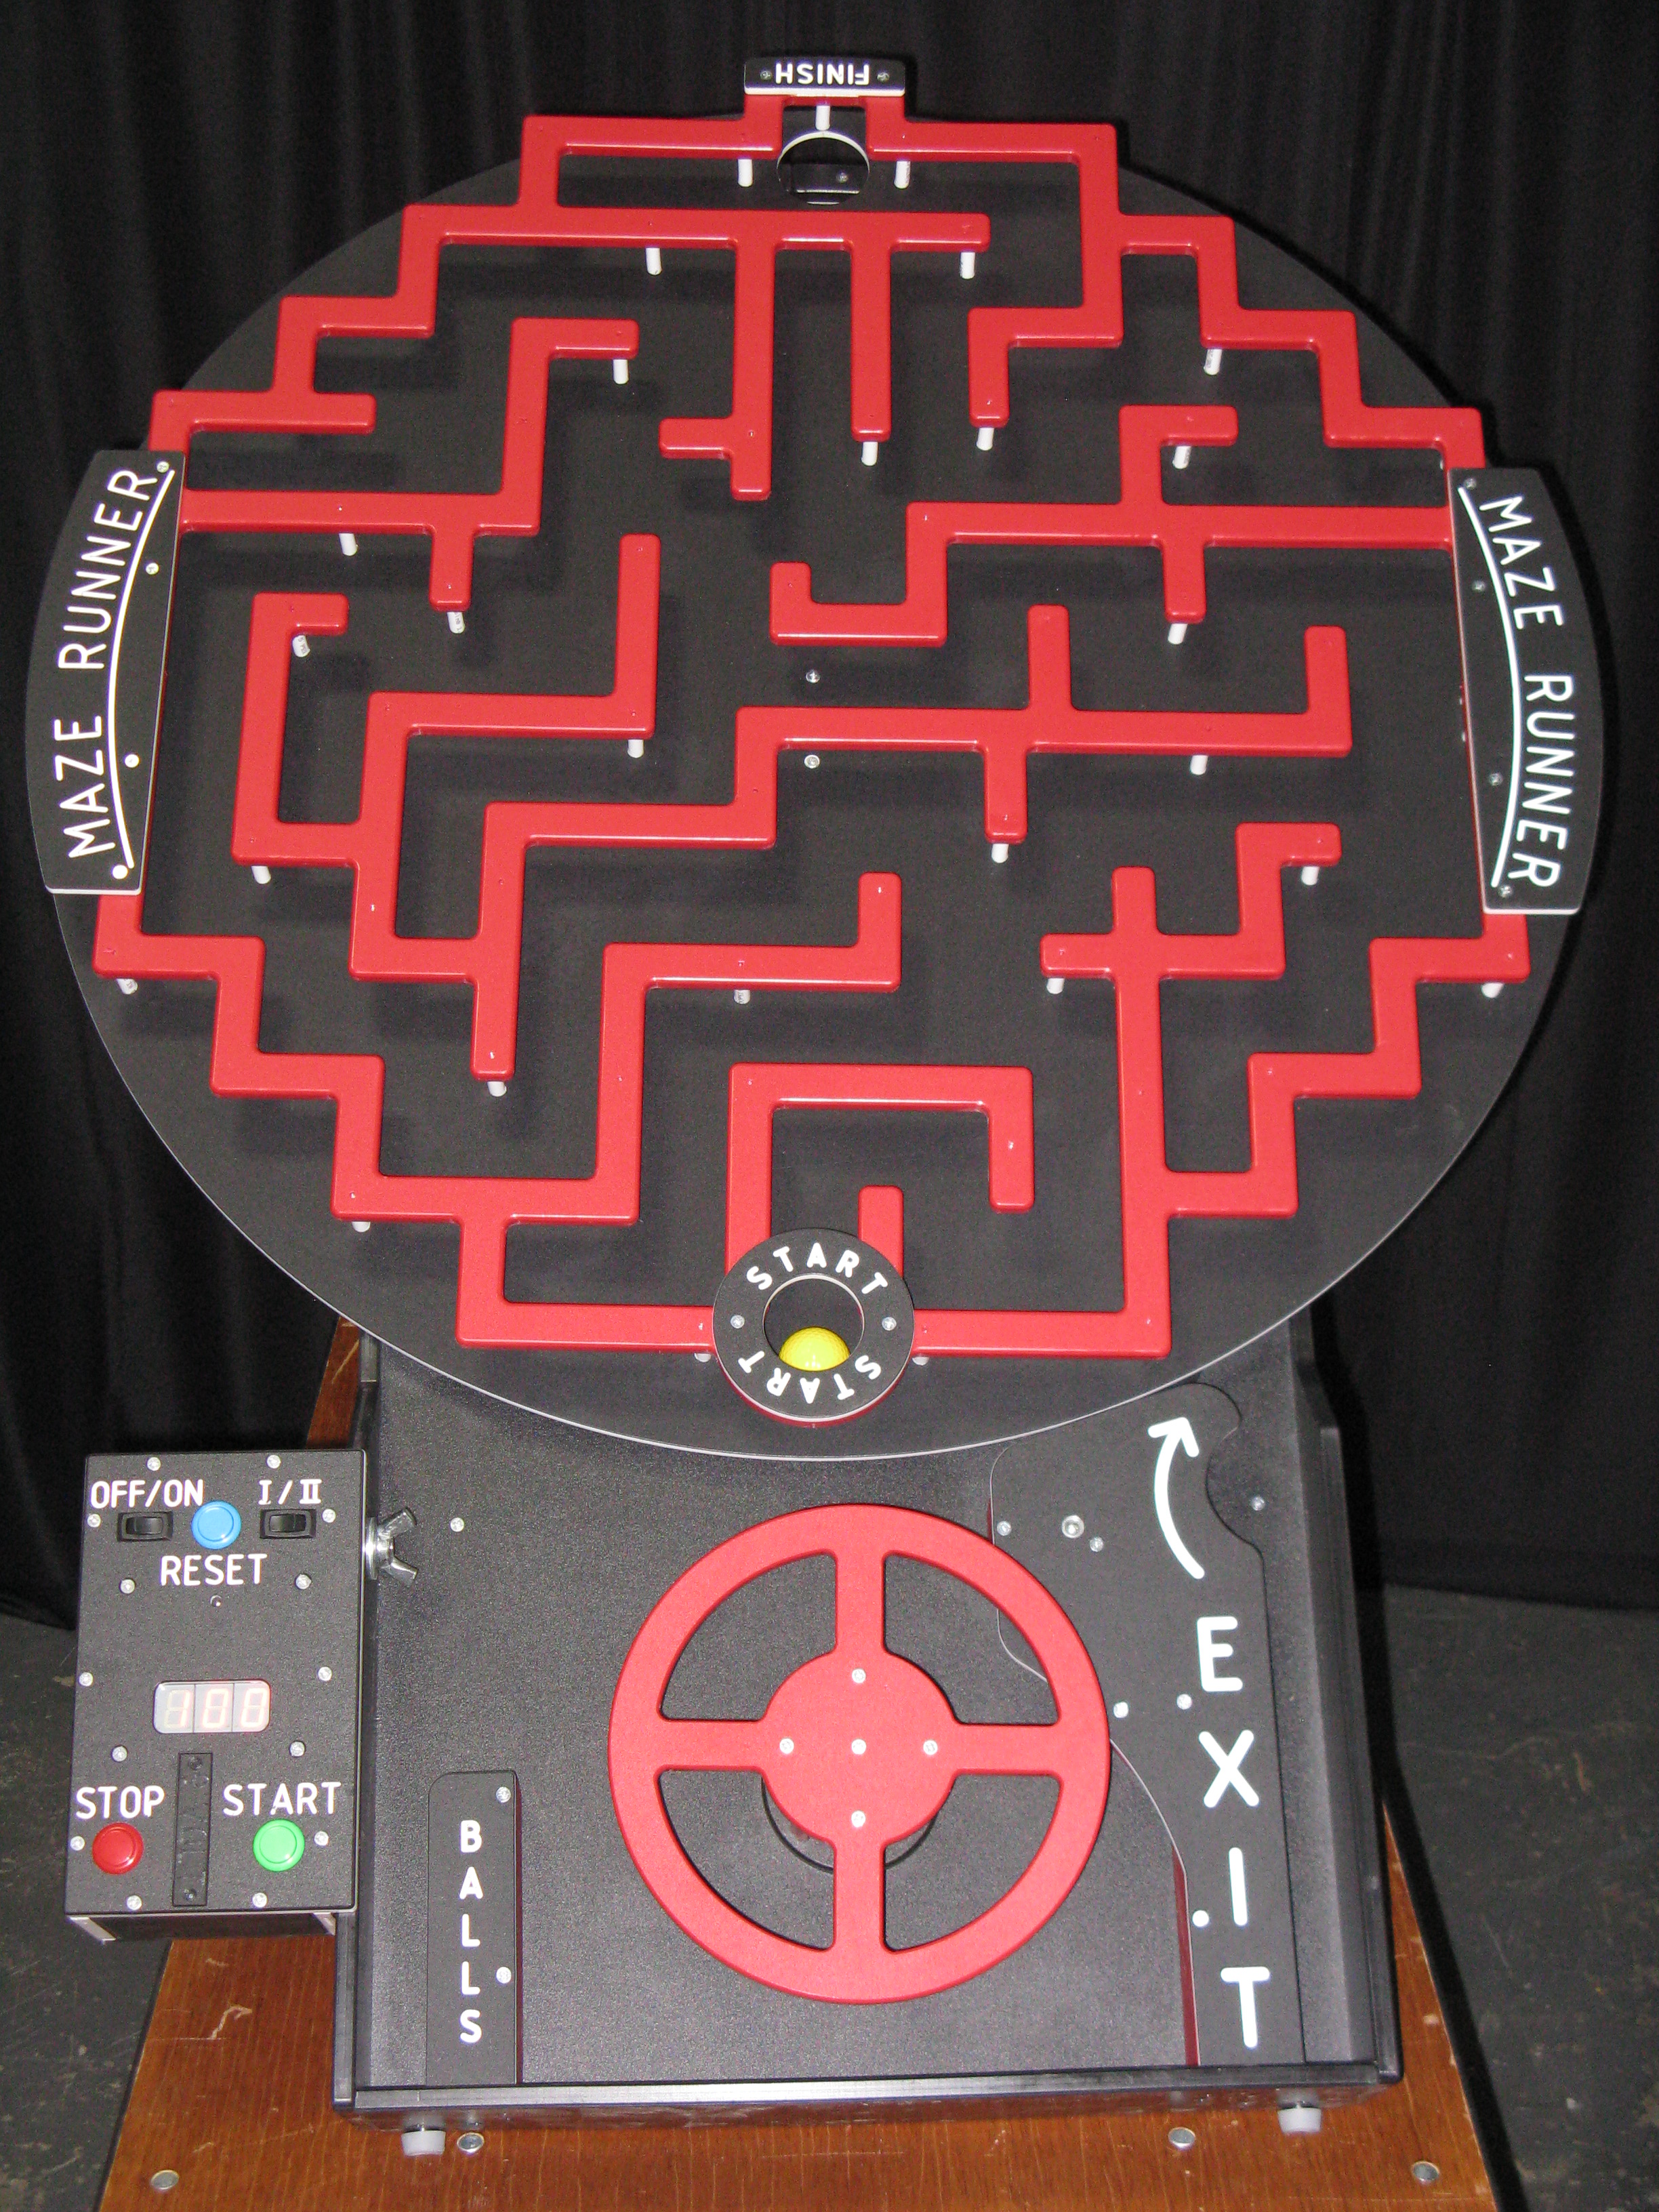 The Maze Runner Board Game